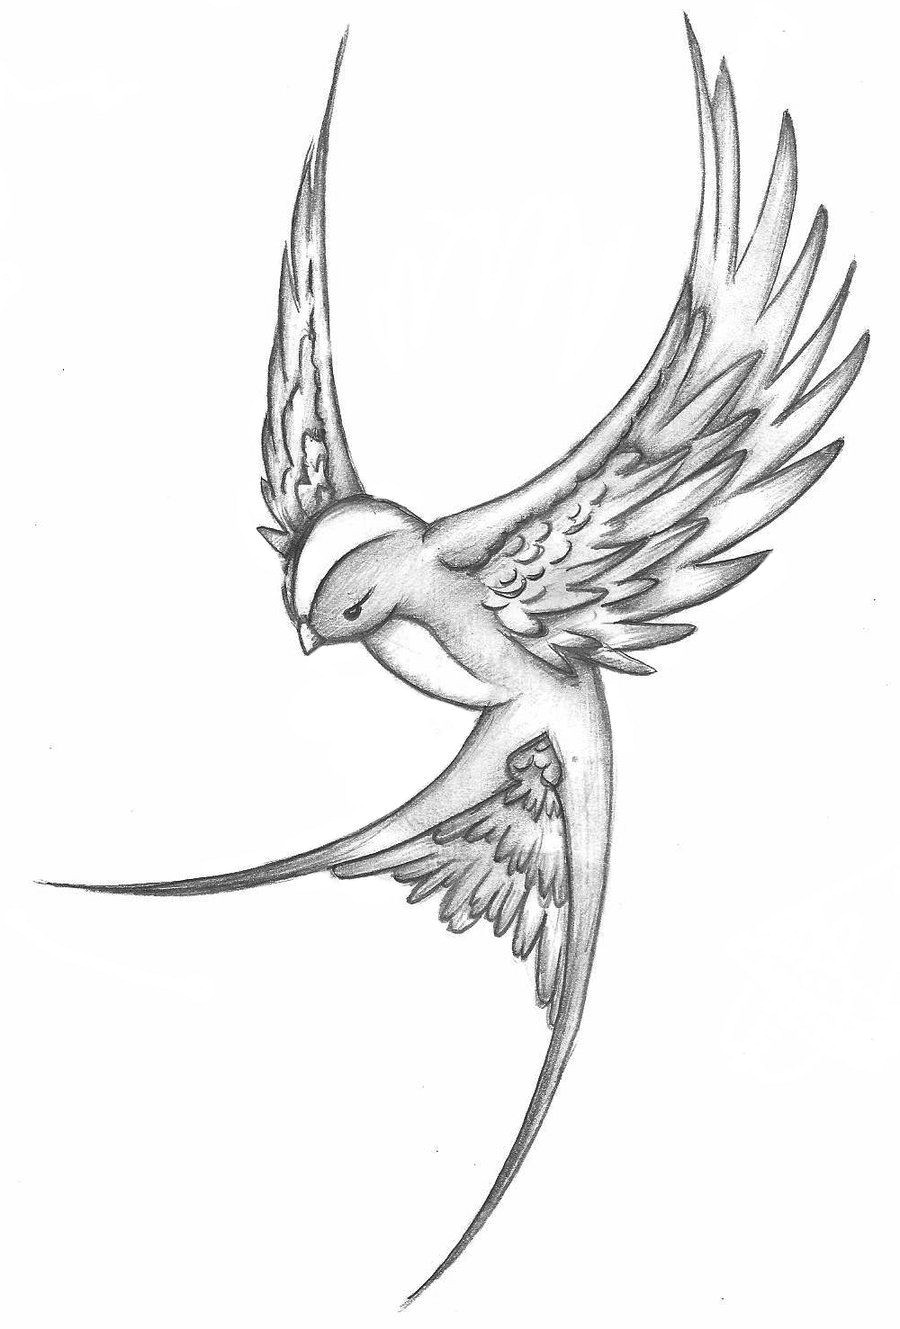 Drawings Of European Dragons Killer Celtic Dragon Tattoo 11795 Inspirational Tattoos Celtic